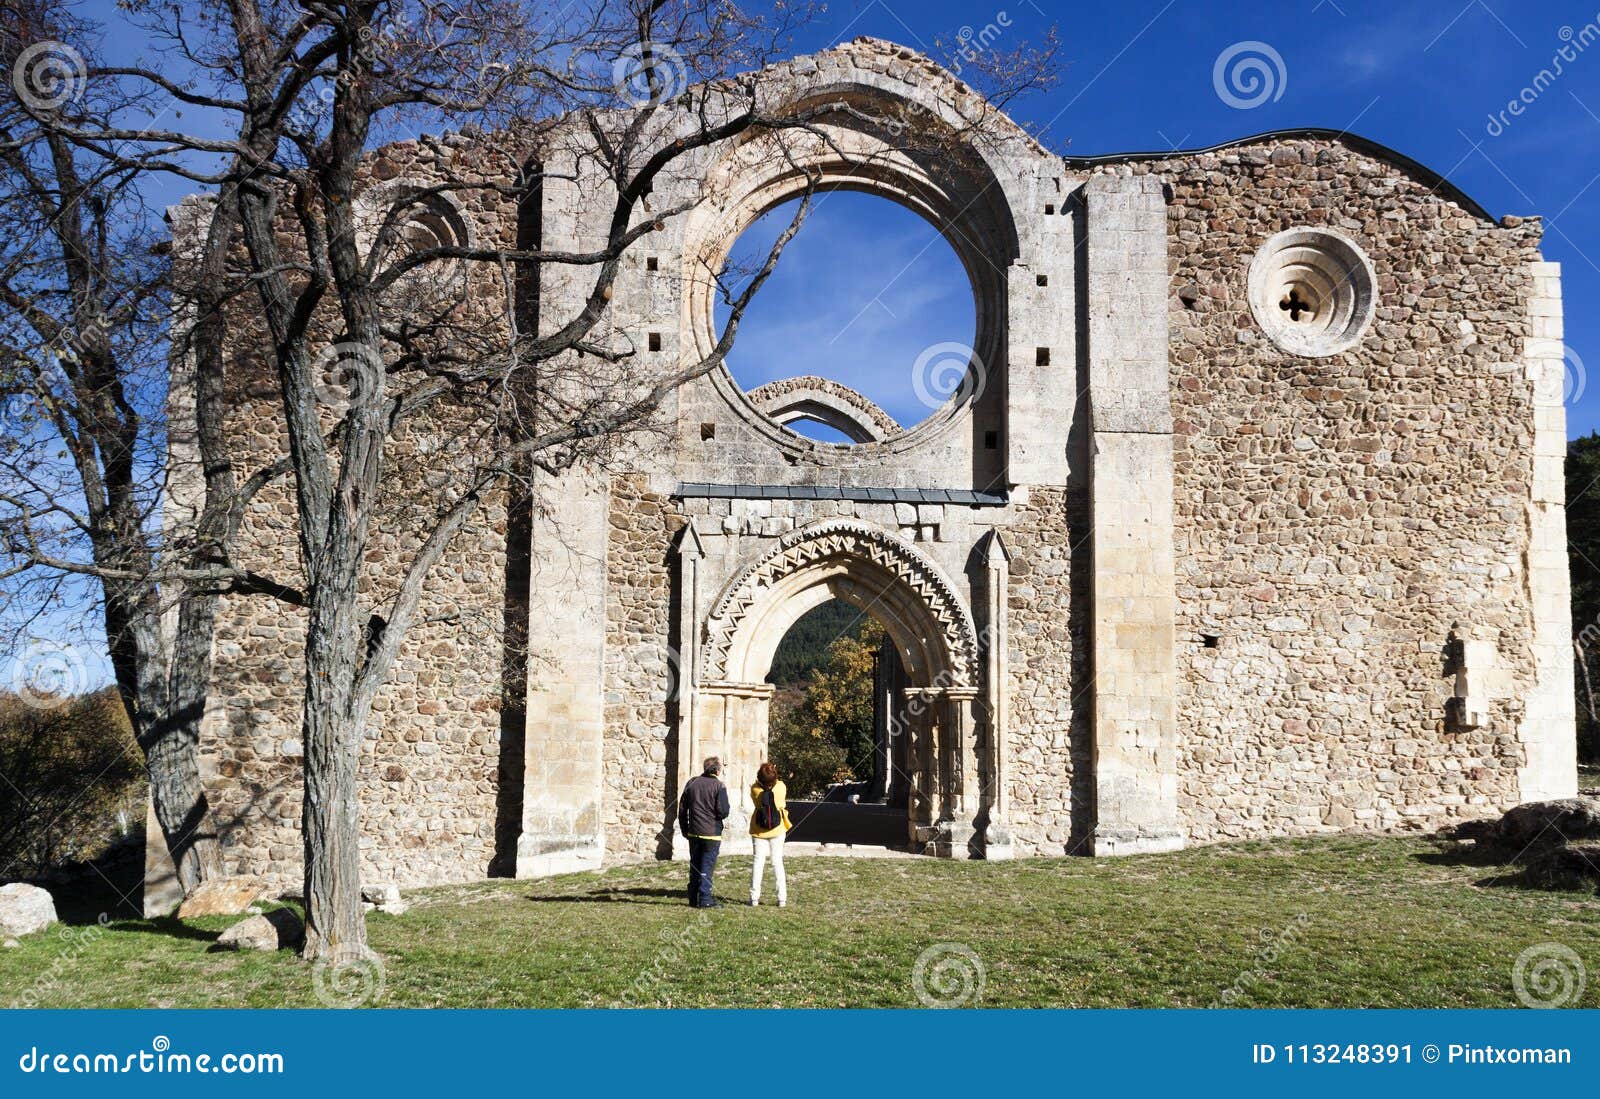 cistercian monastery in ruins. collado hermoso, segovia. spain